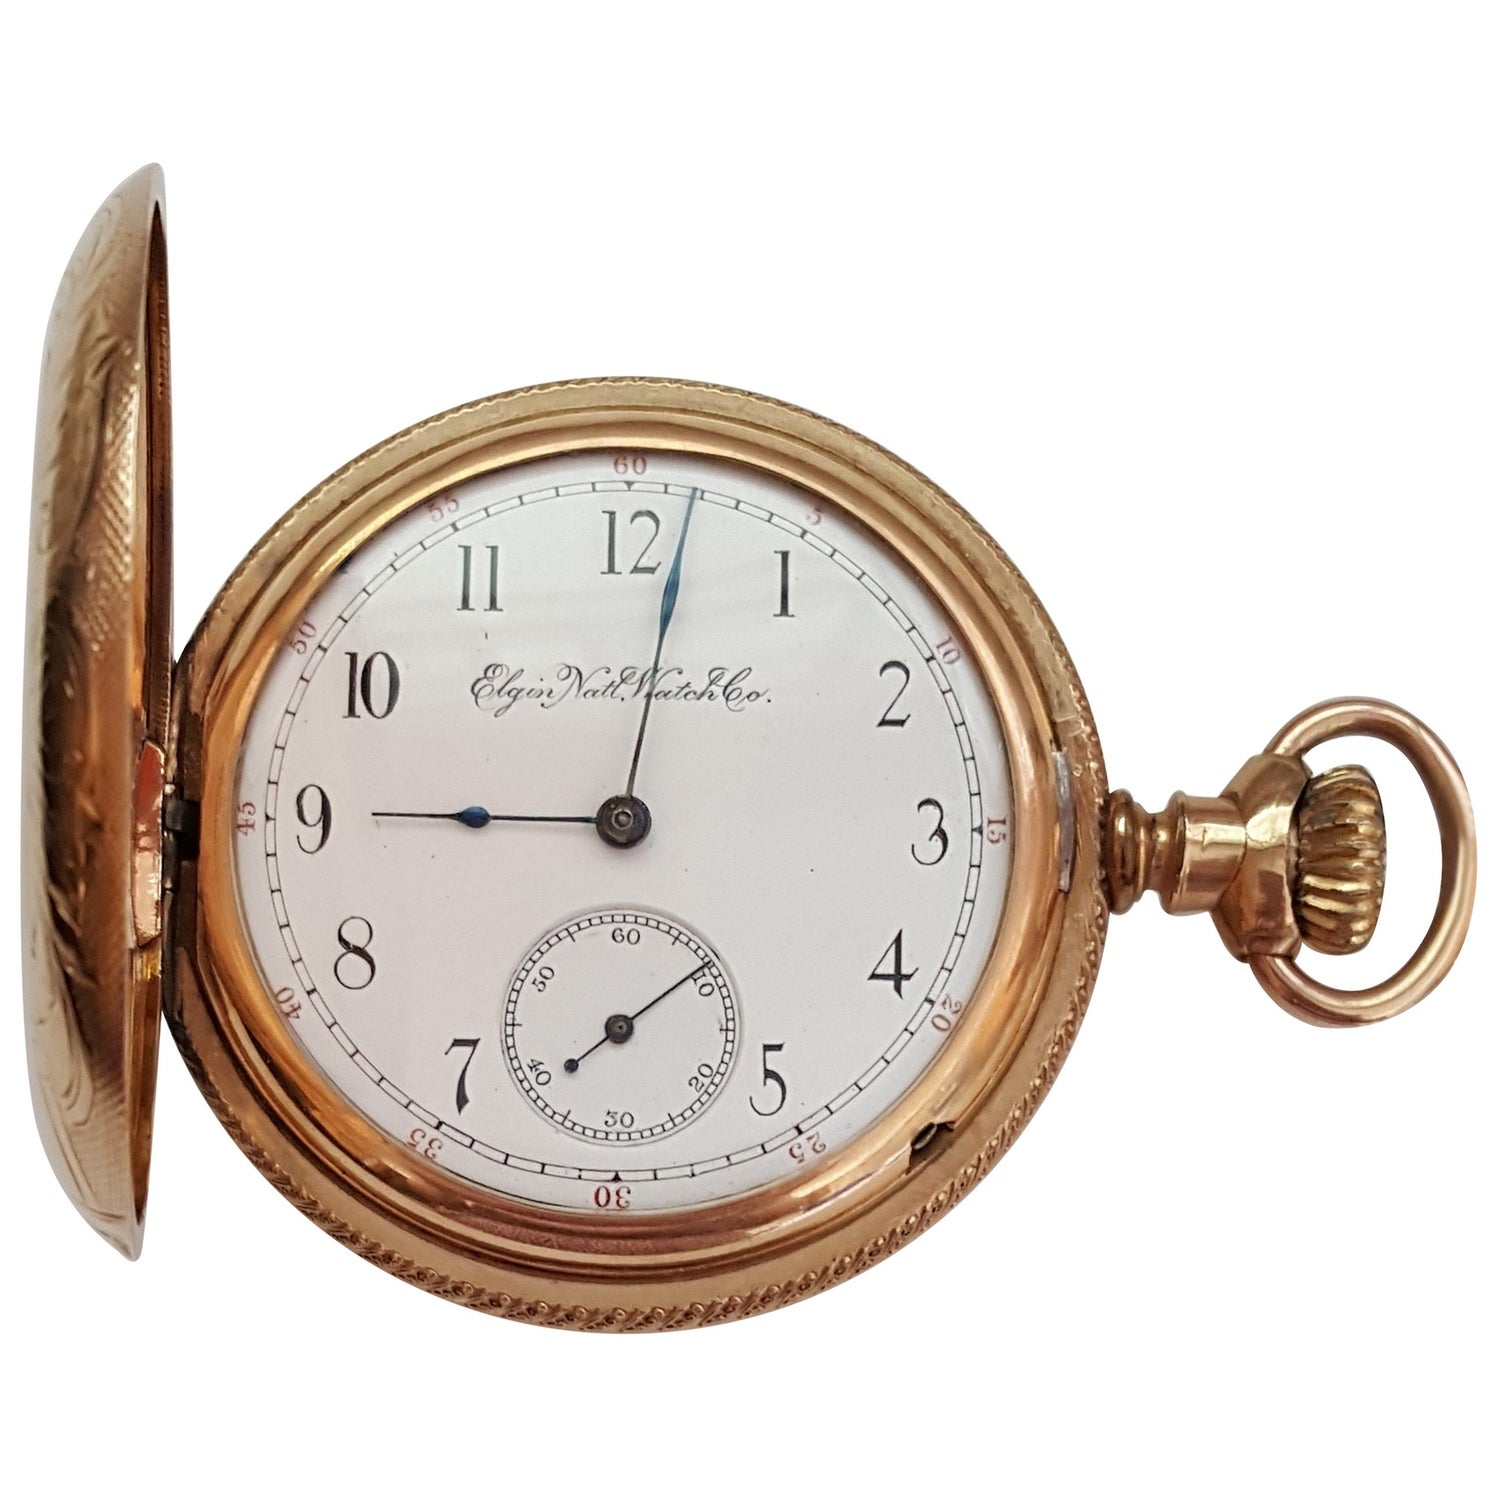 1899 Elgin Pocket Watch - For Sale on 1stDibs | 1899 elgin pocket watch  value, 1898 elgin pocket watch value, 1890 elgin pocket watch